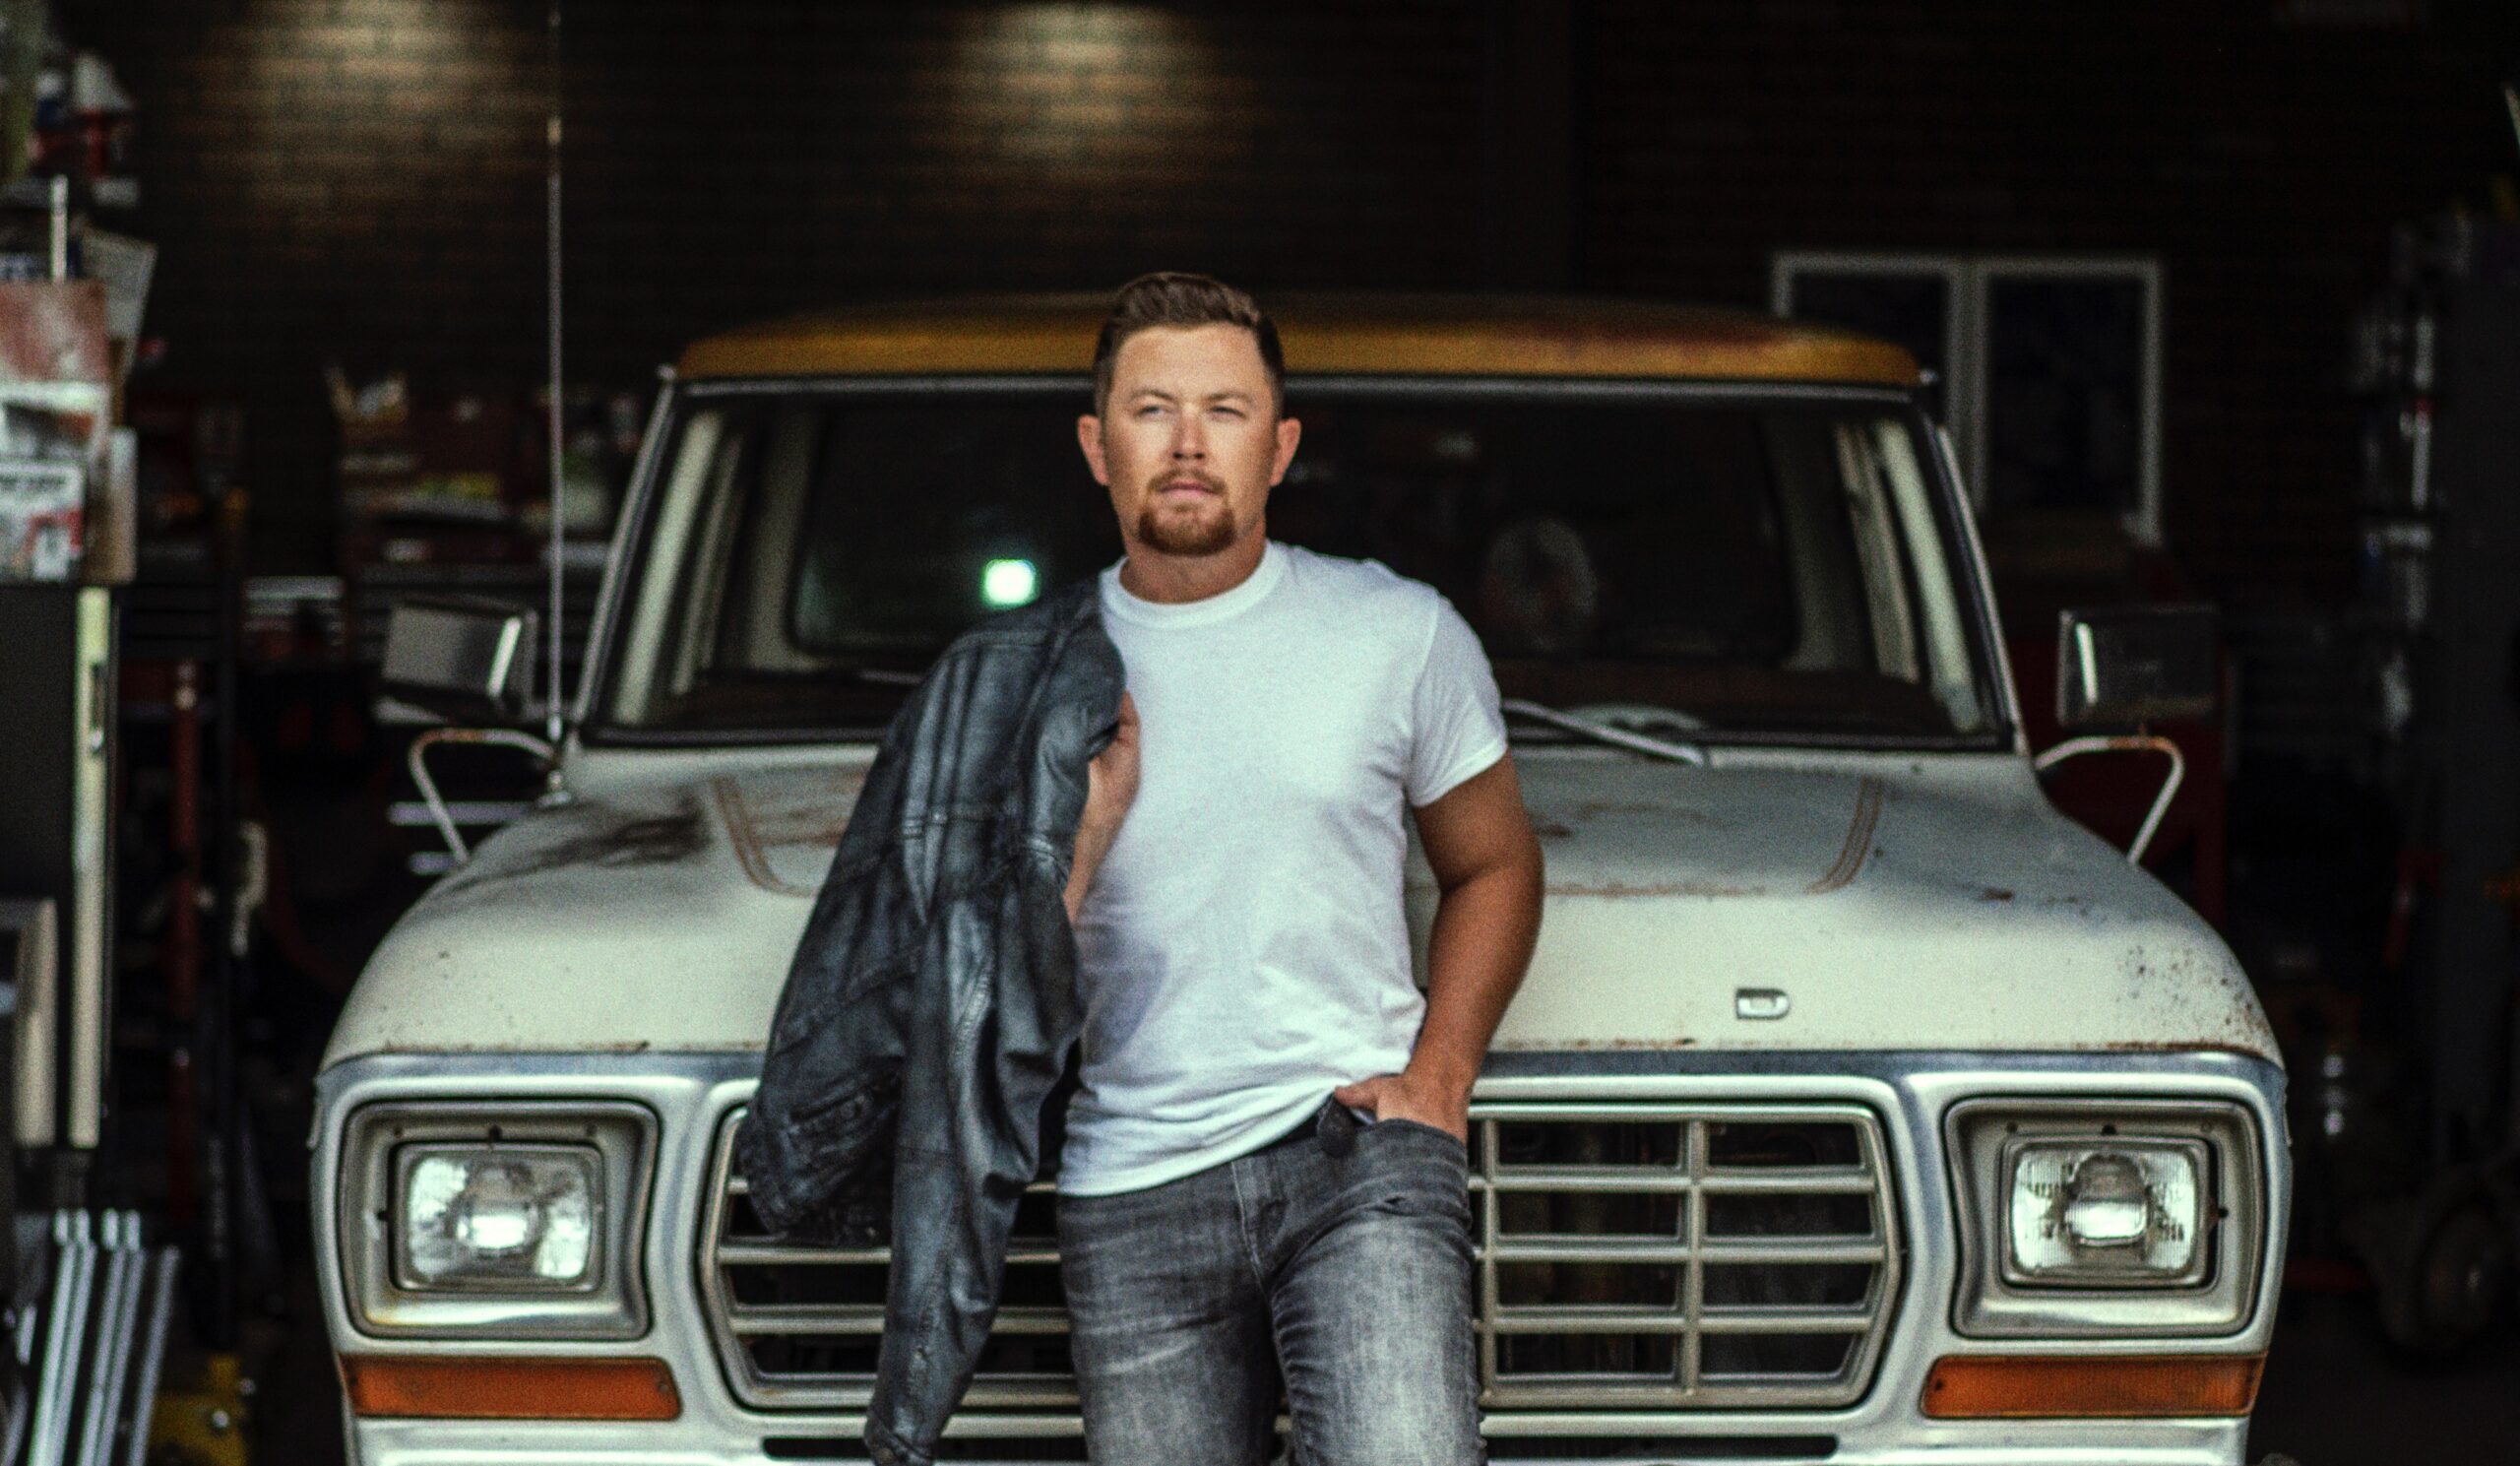 Scotty McCreery Announces New Album Titled “Same Truck”